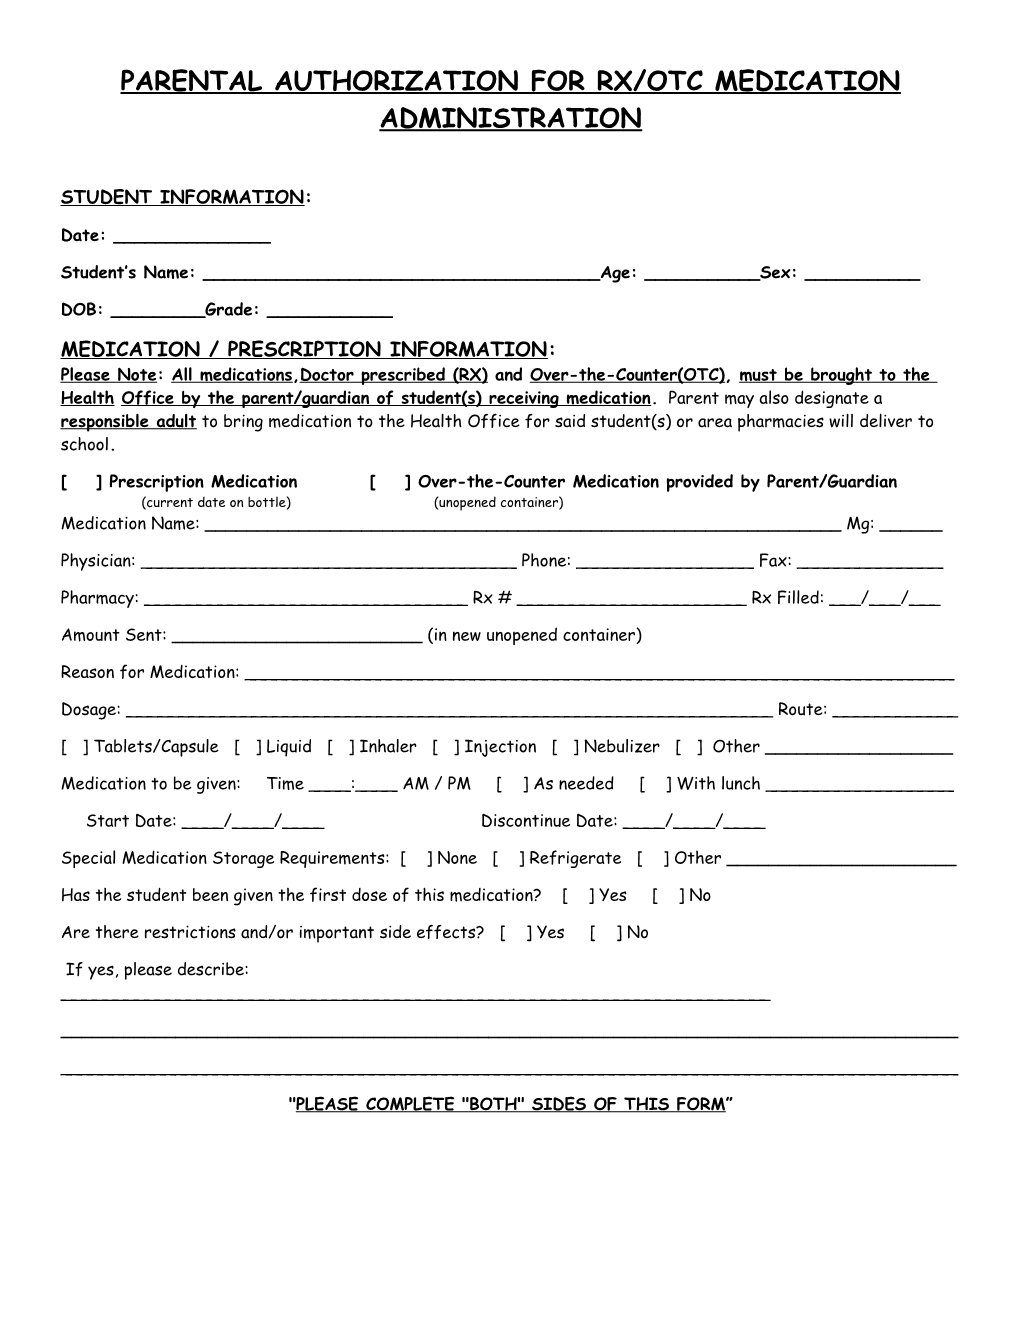 Parental Authorization for Rx/Otc Medication Administration